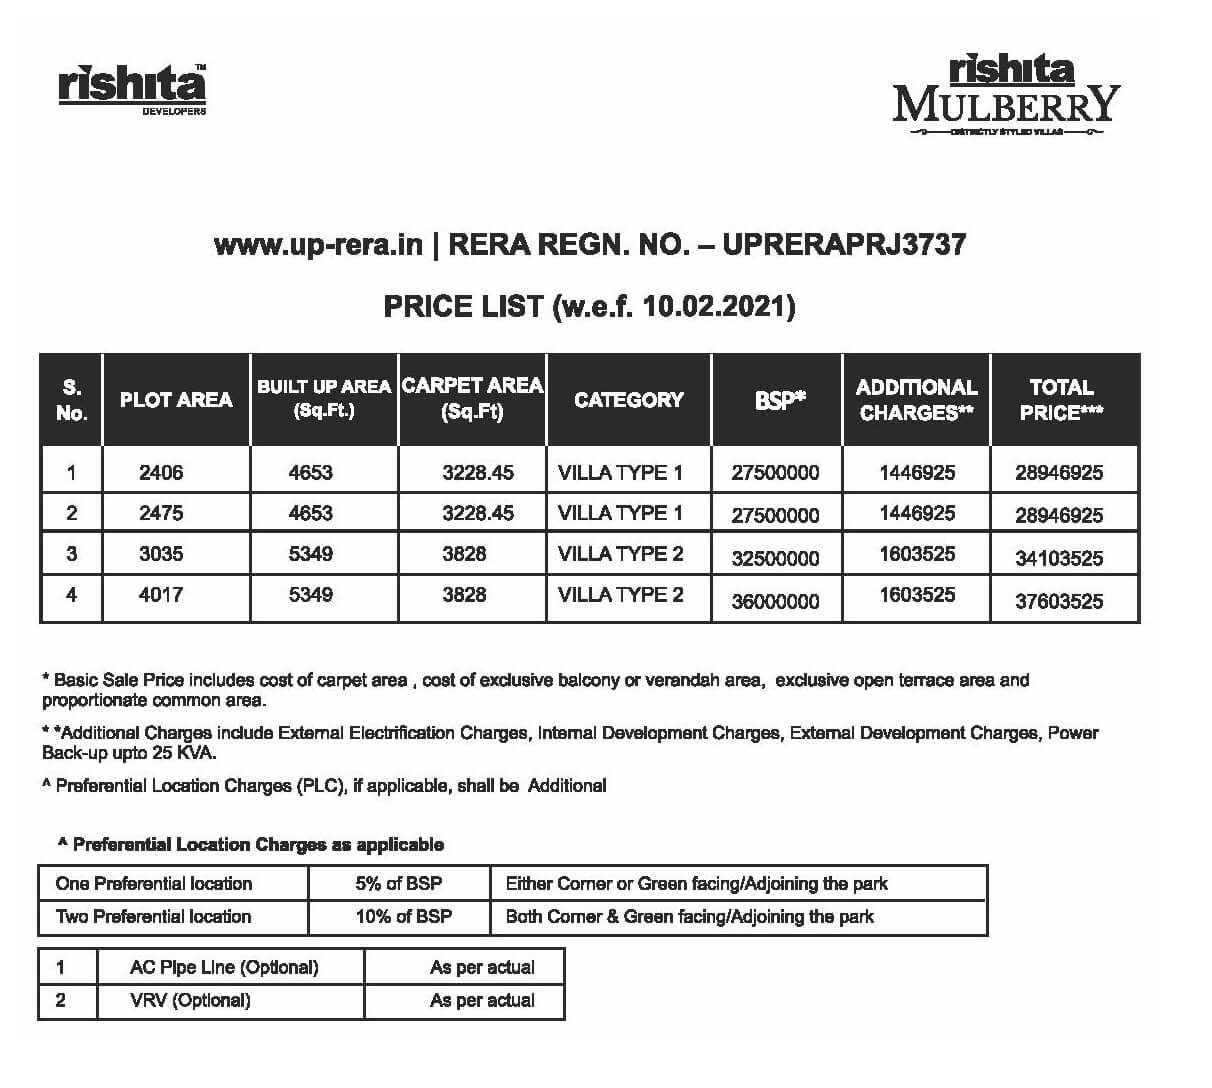 Rishita Mulberry Villas Price List